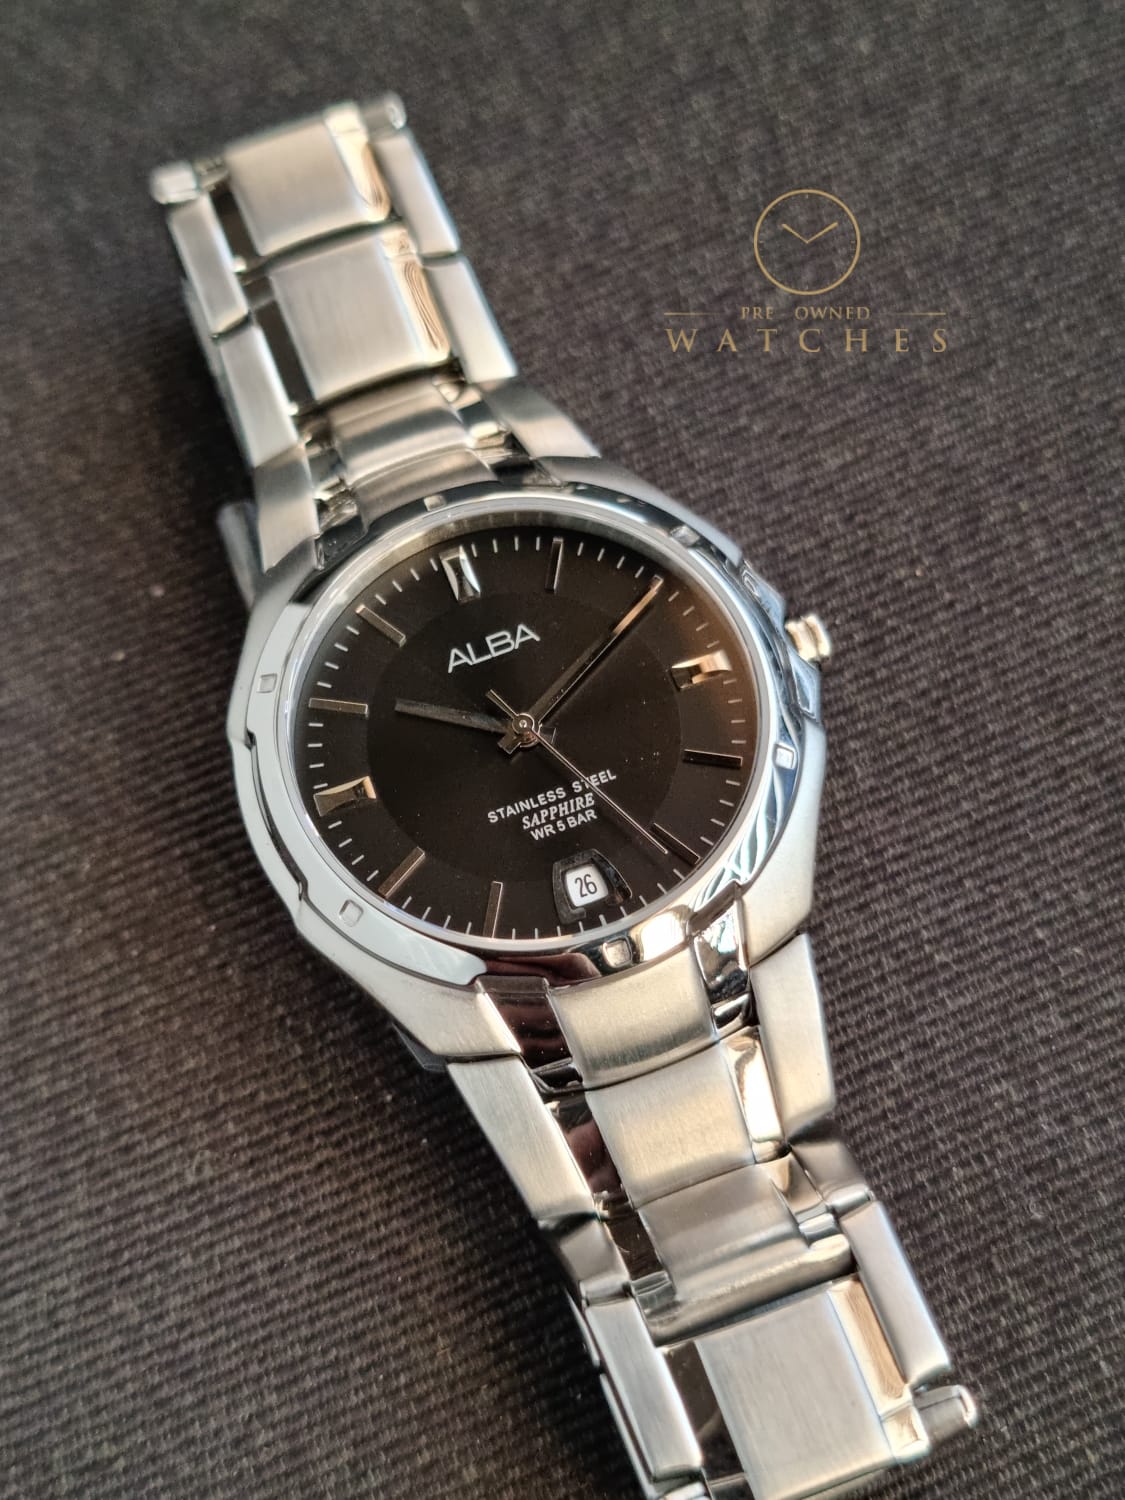 Alba Sub Brand Of Seiko Gents Watch Black Dial Date function Quartz Watch